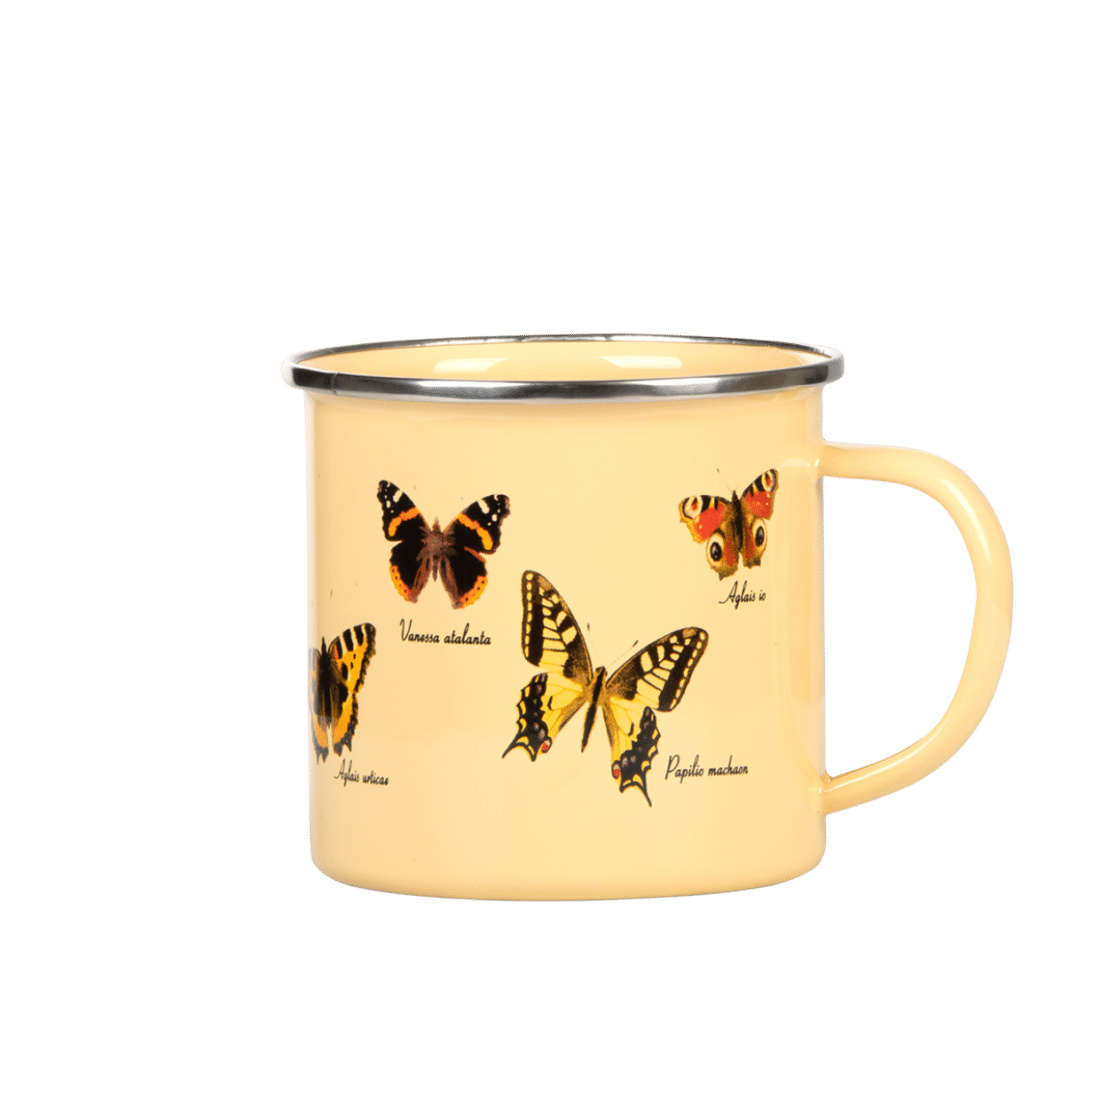 Cute enamel mug with butterflies